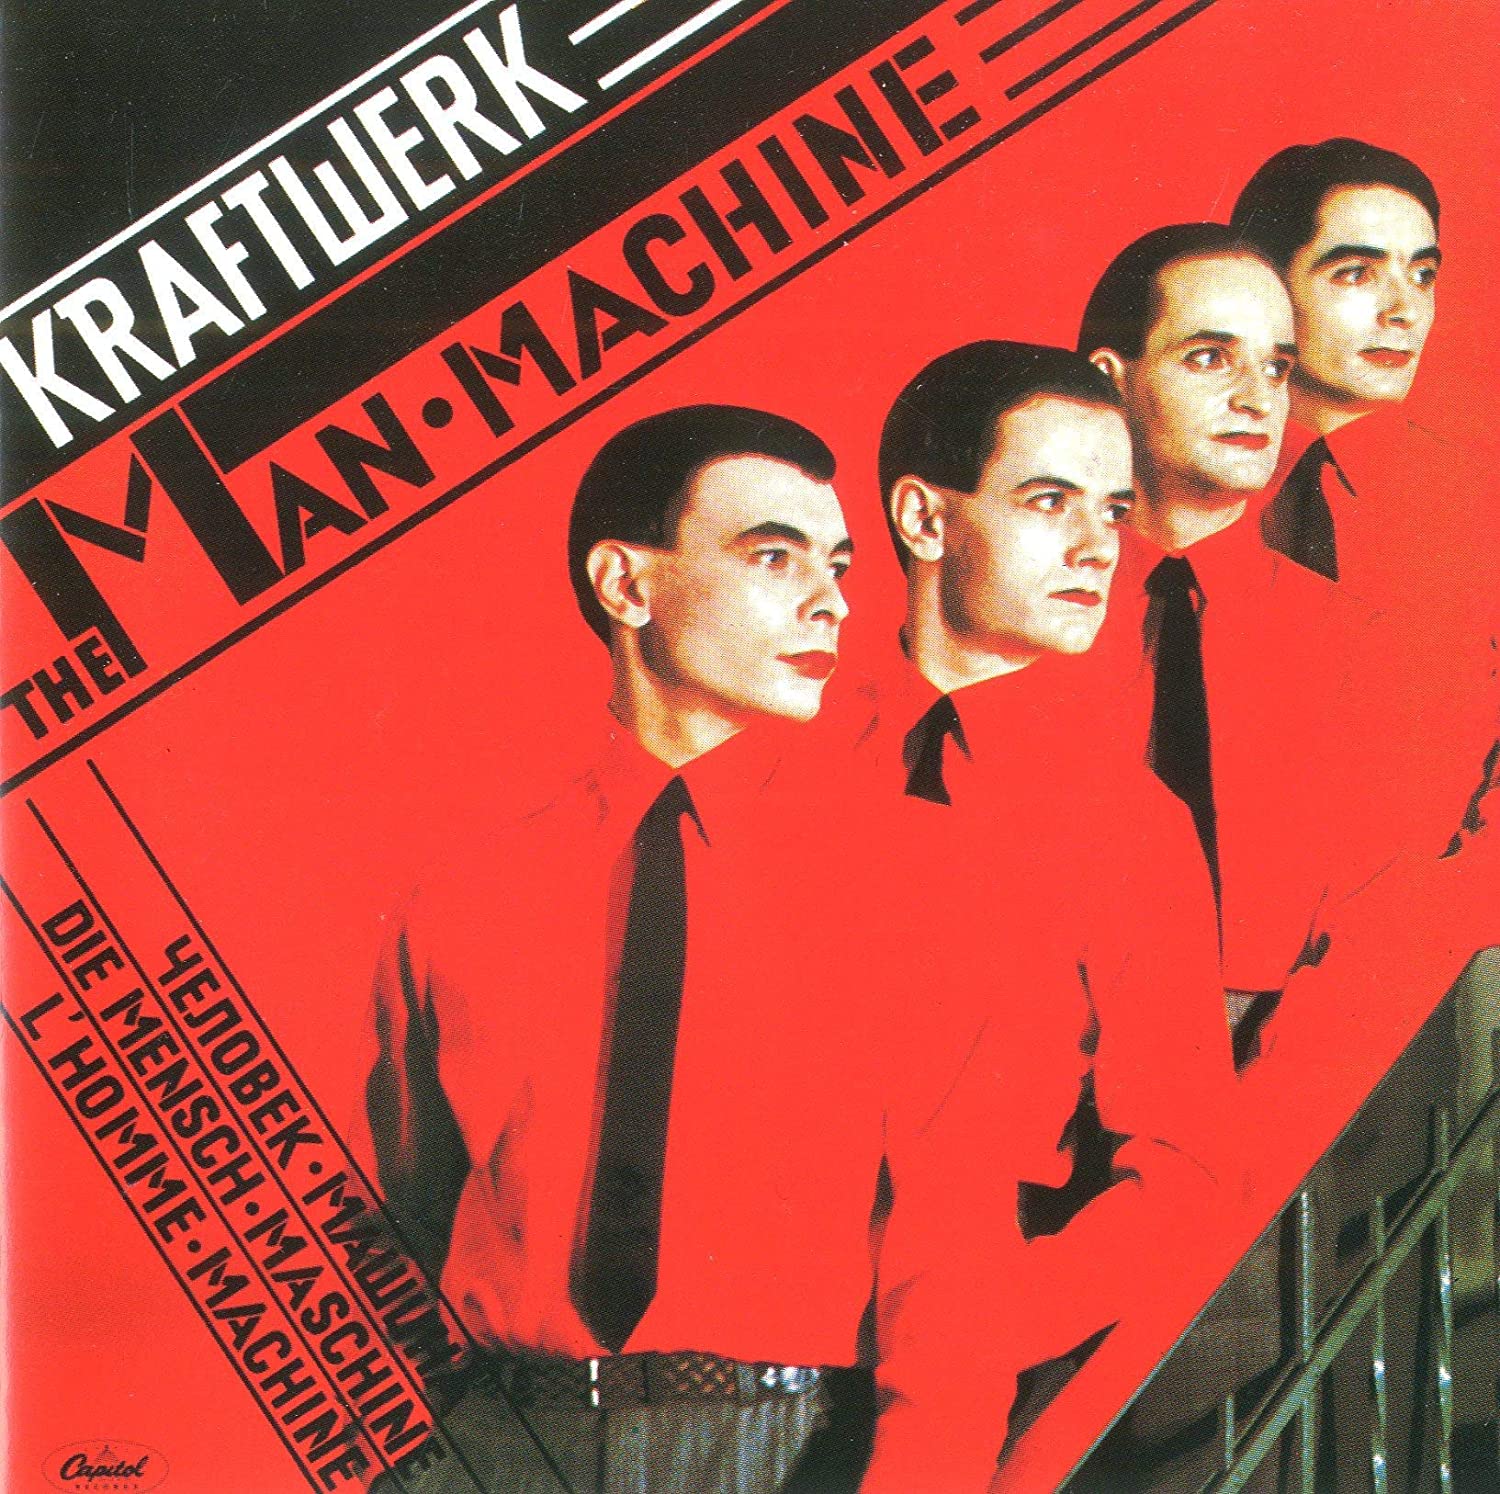 Kraftwerk "The Man Machine" (color vinyl) LP